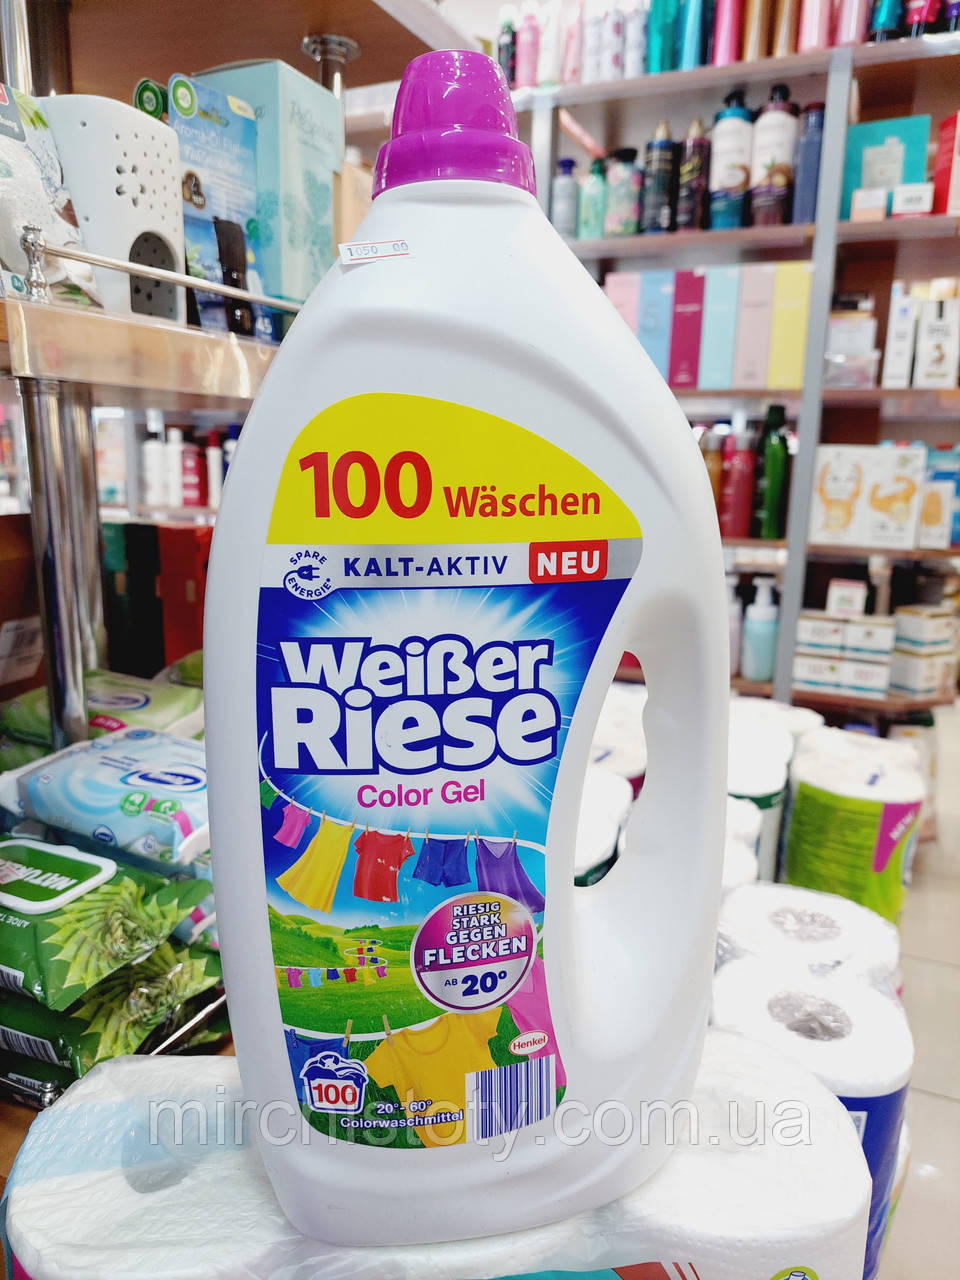 Гель для прання кольорових речей Weiber Riese Color Weisser Riese колор (100 циклів)